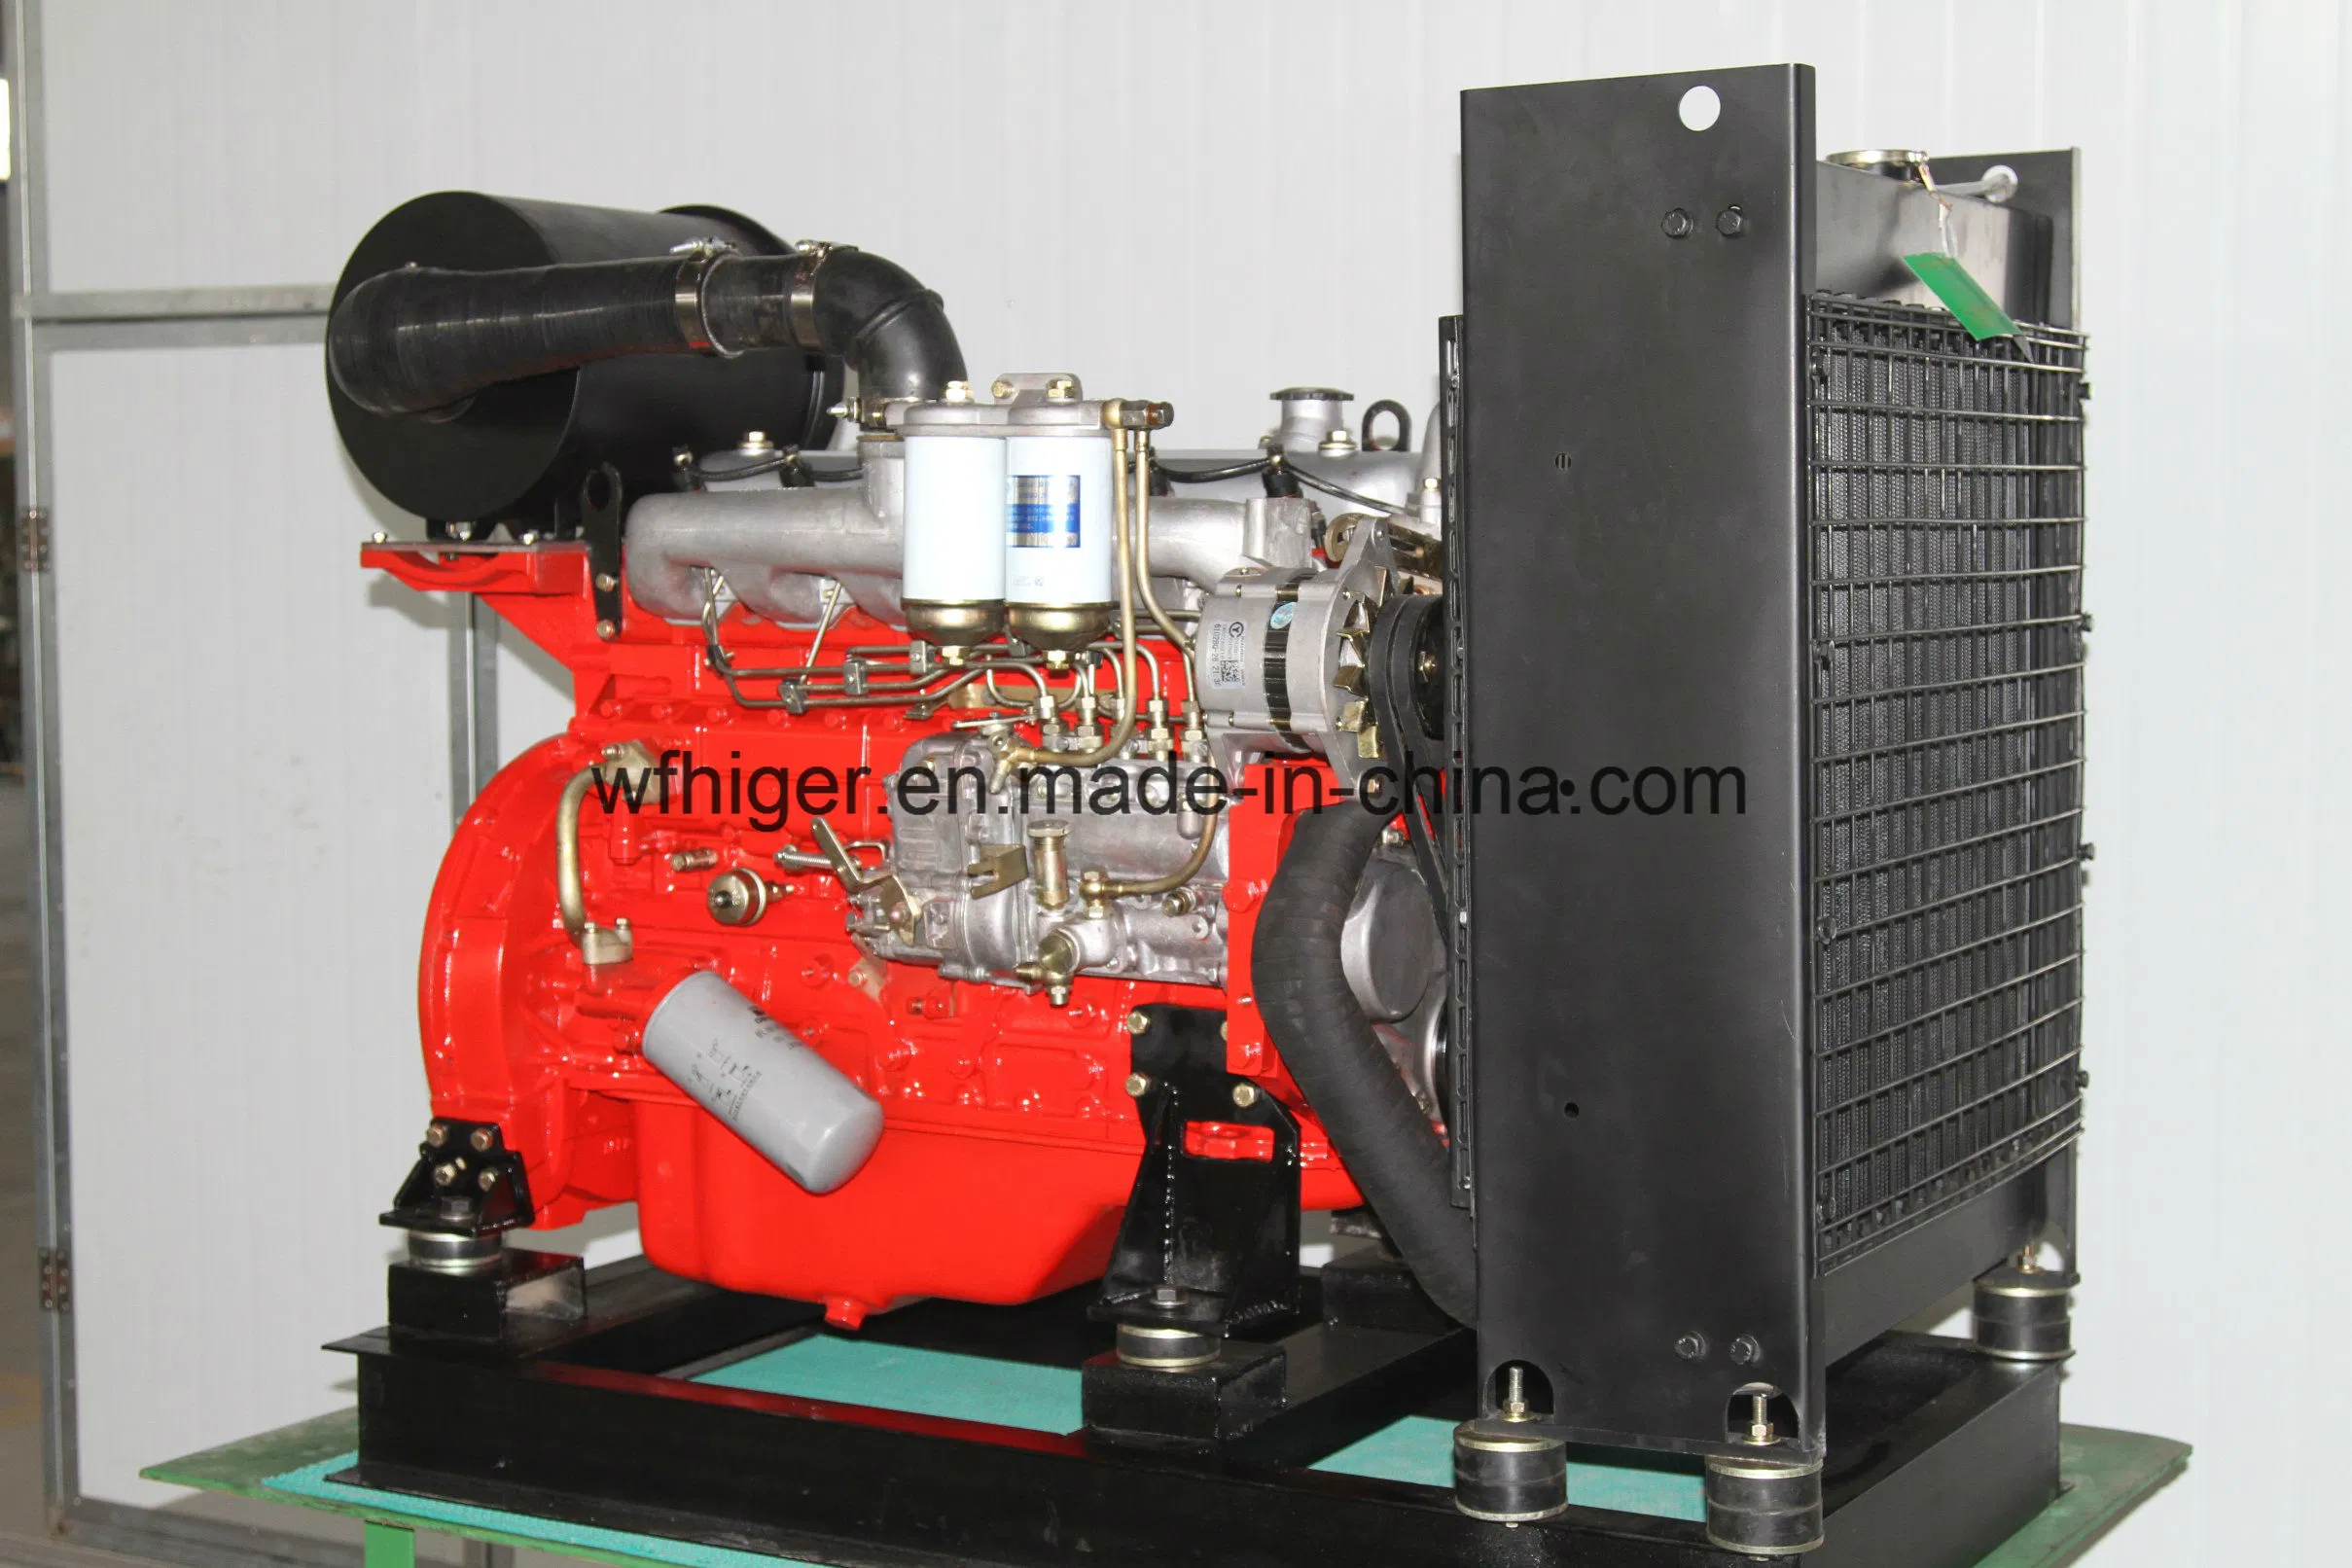 Motor Diesel de Tecnologia Isuzu para Gerador/Bomba de Água/Bomba de Incêndio 4ja1, 4jb1, 4bd, 6bd, 6tw.